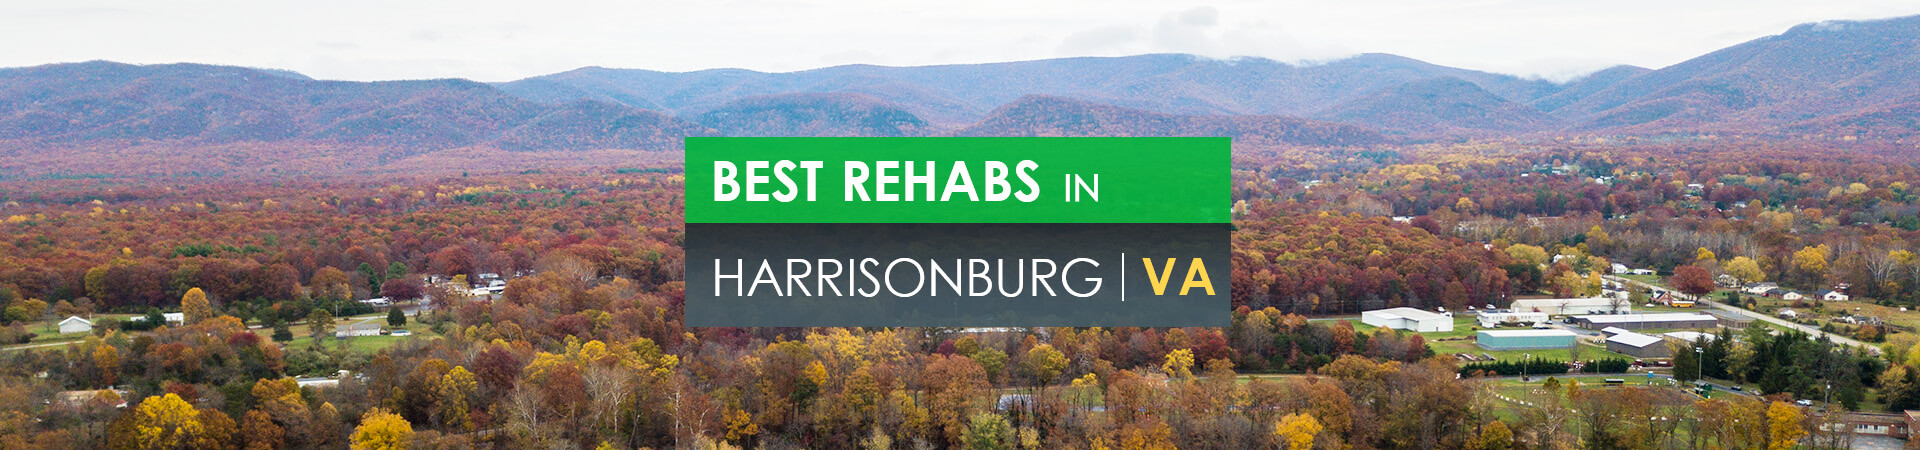 Best rehabs in Harrisonburg, VA